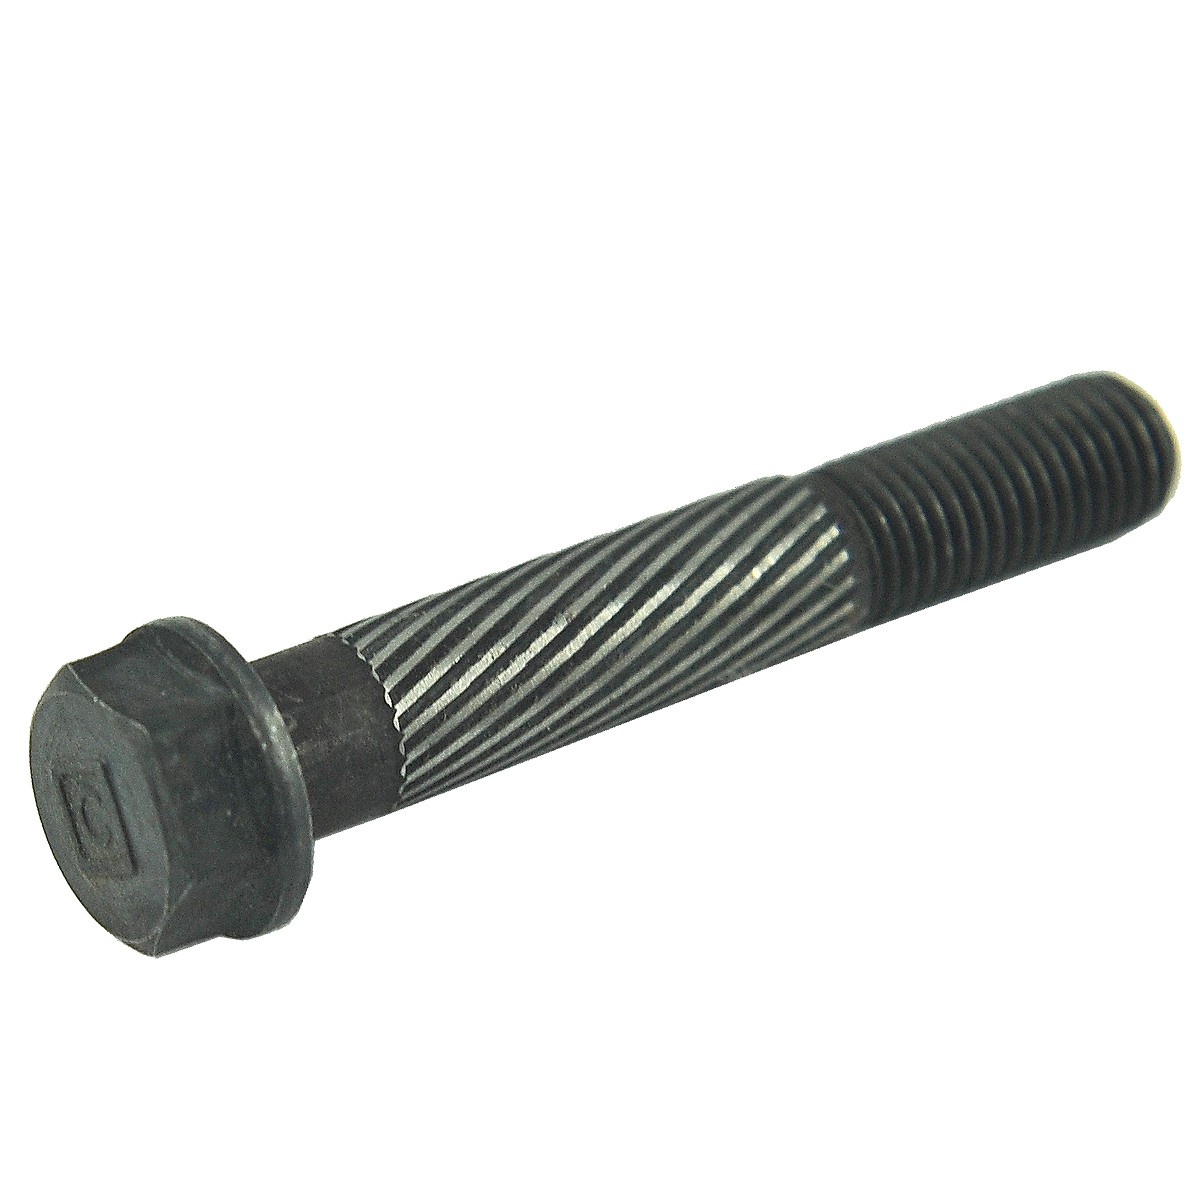 Connecting rod bolt / M8 x 50 / Kubota L01/L02 / 15521-22140 / 15221- 22142 / 6-25-101-01